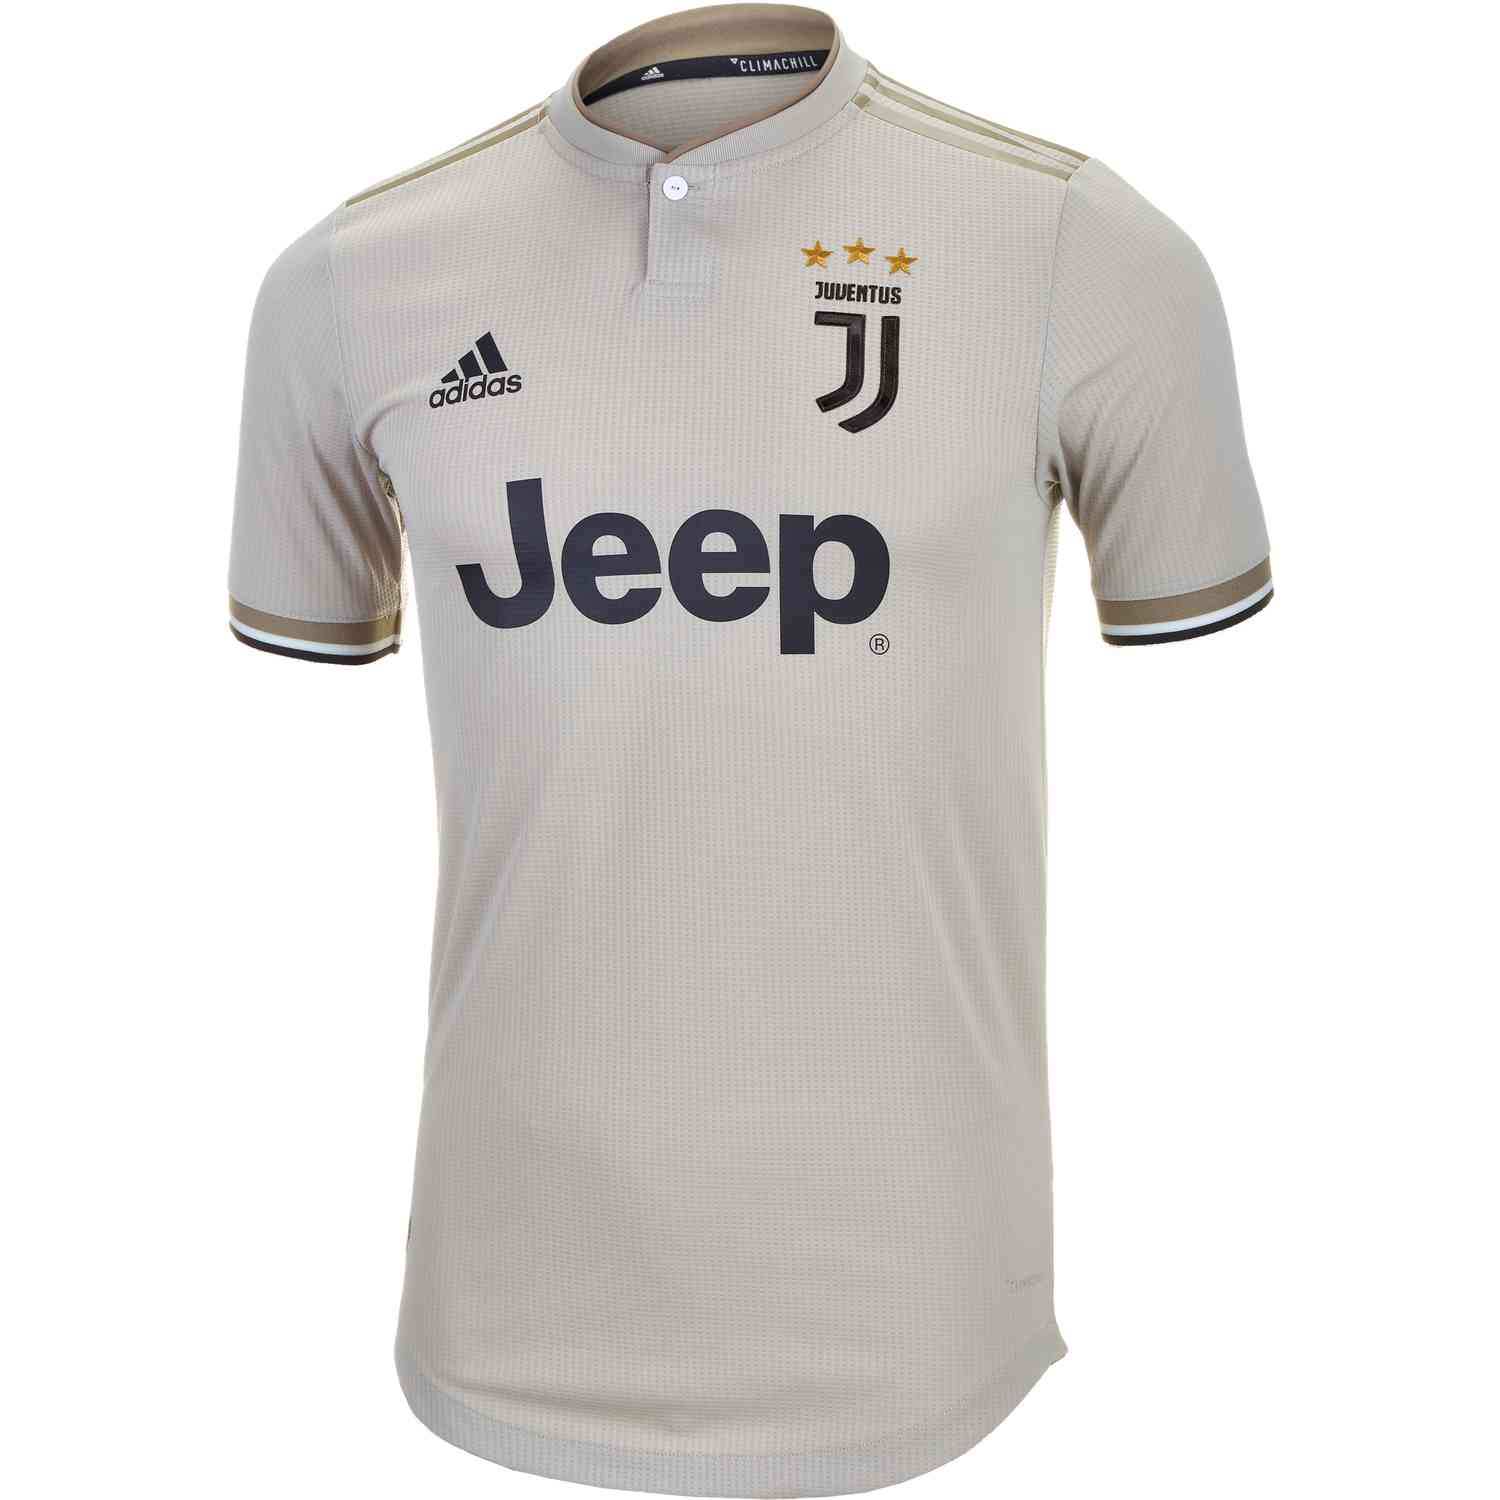 adidas Juventus Away Authentic Jersey 2018-19 - SoccerPro